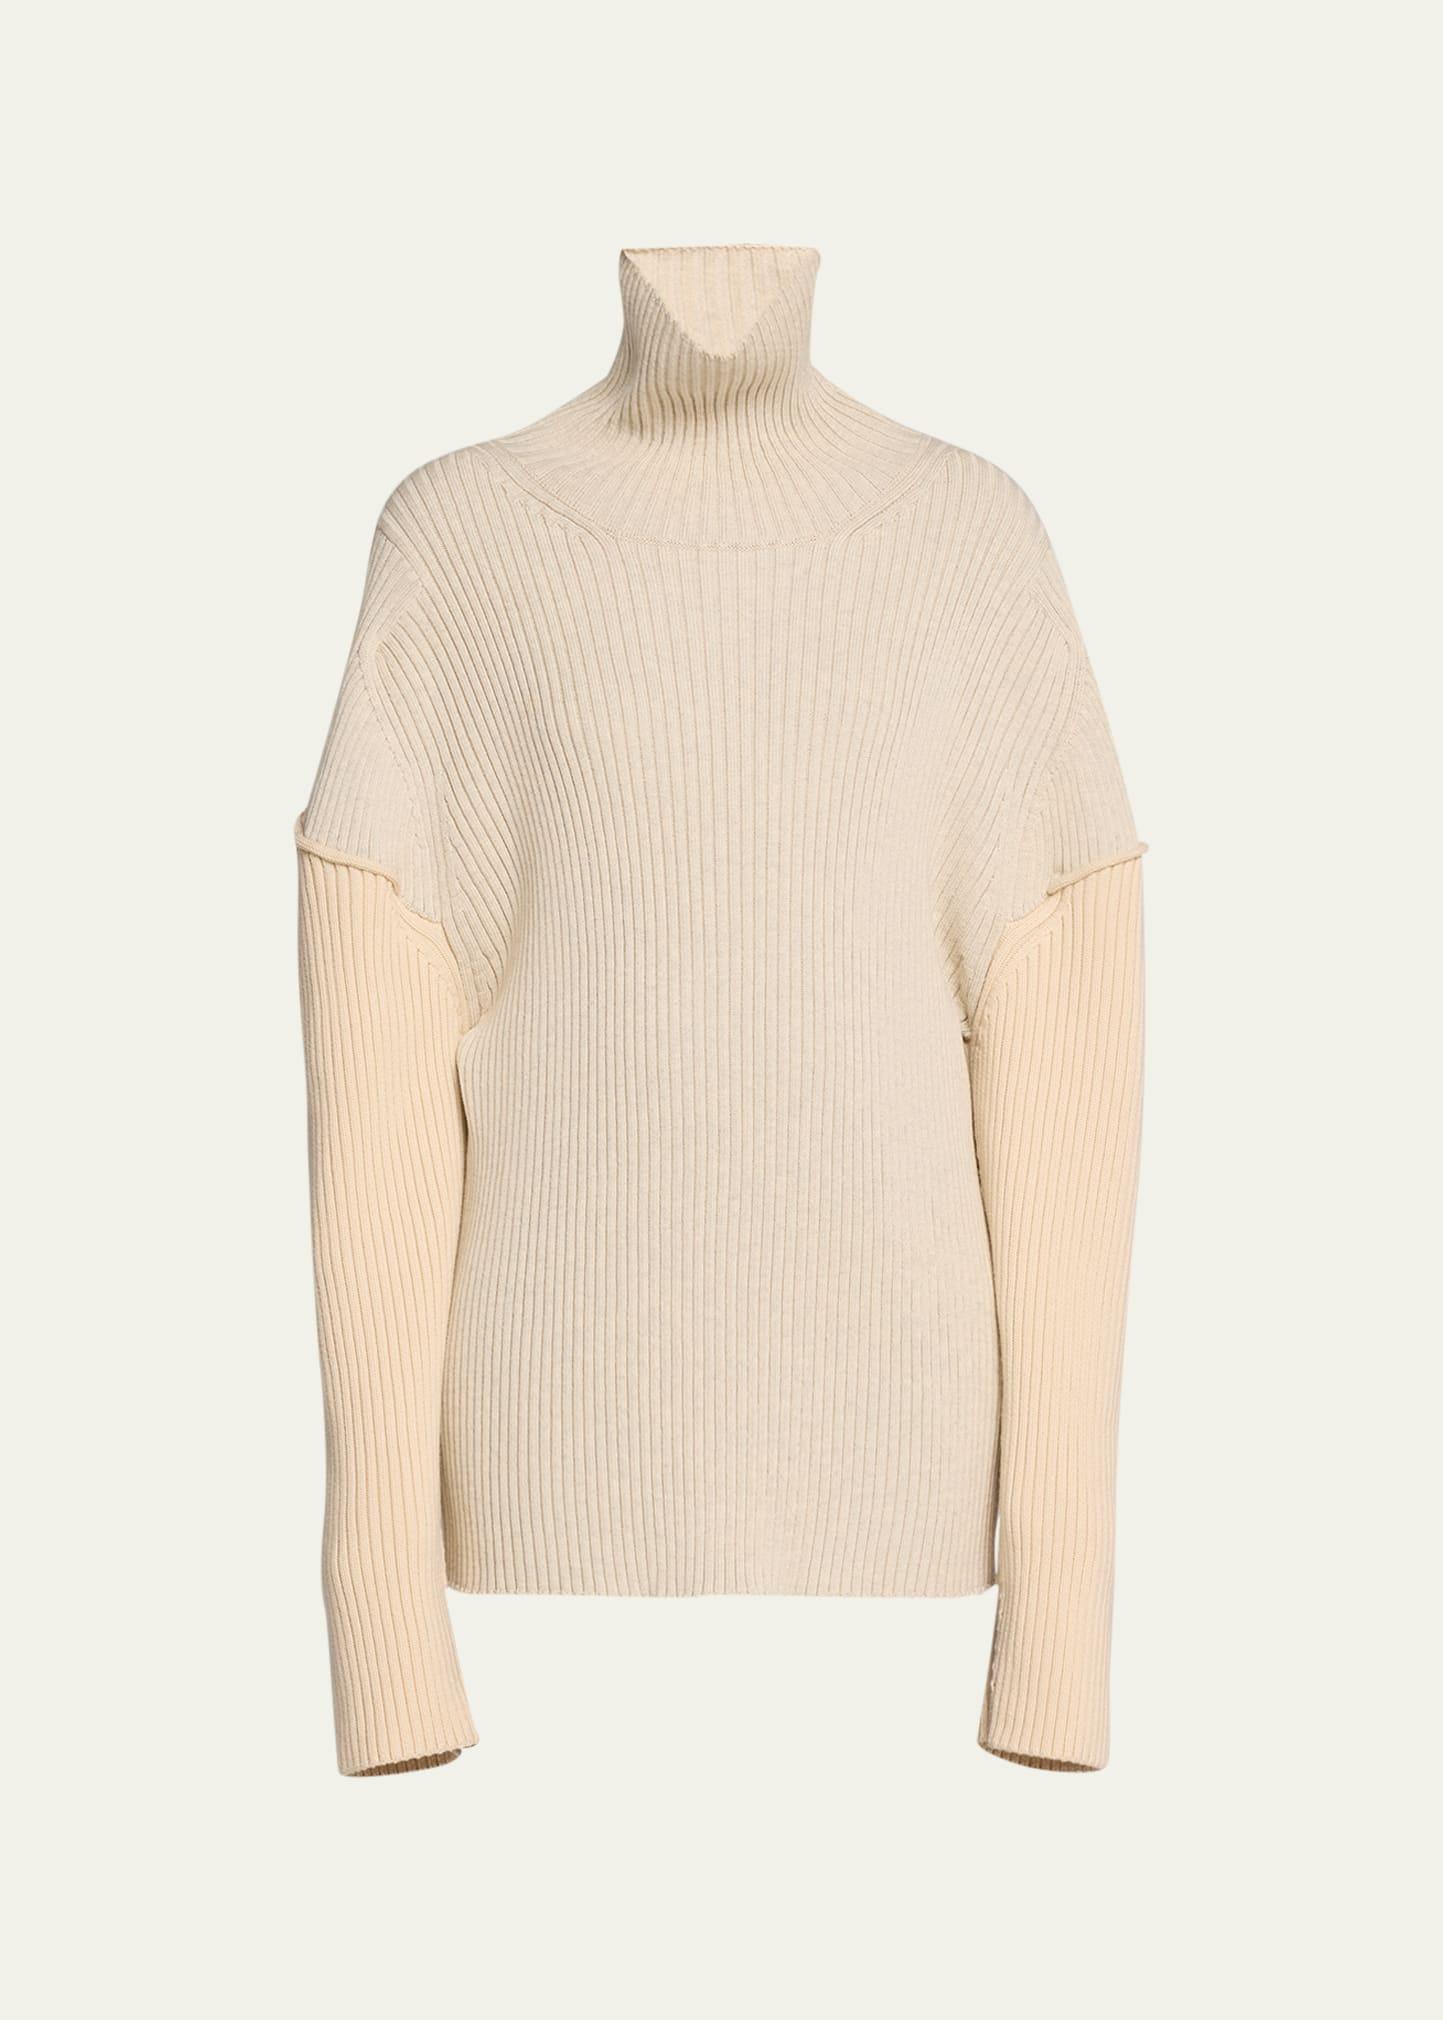 The Row Dua Cotton & Cashmere Rib Turtleneck Sweater Product Image